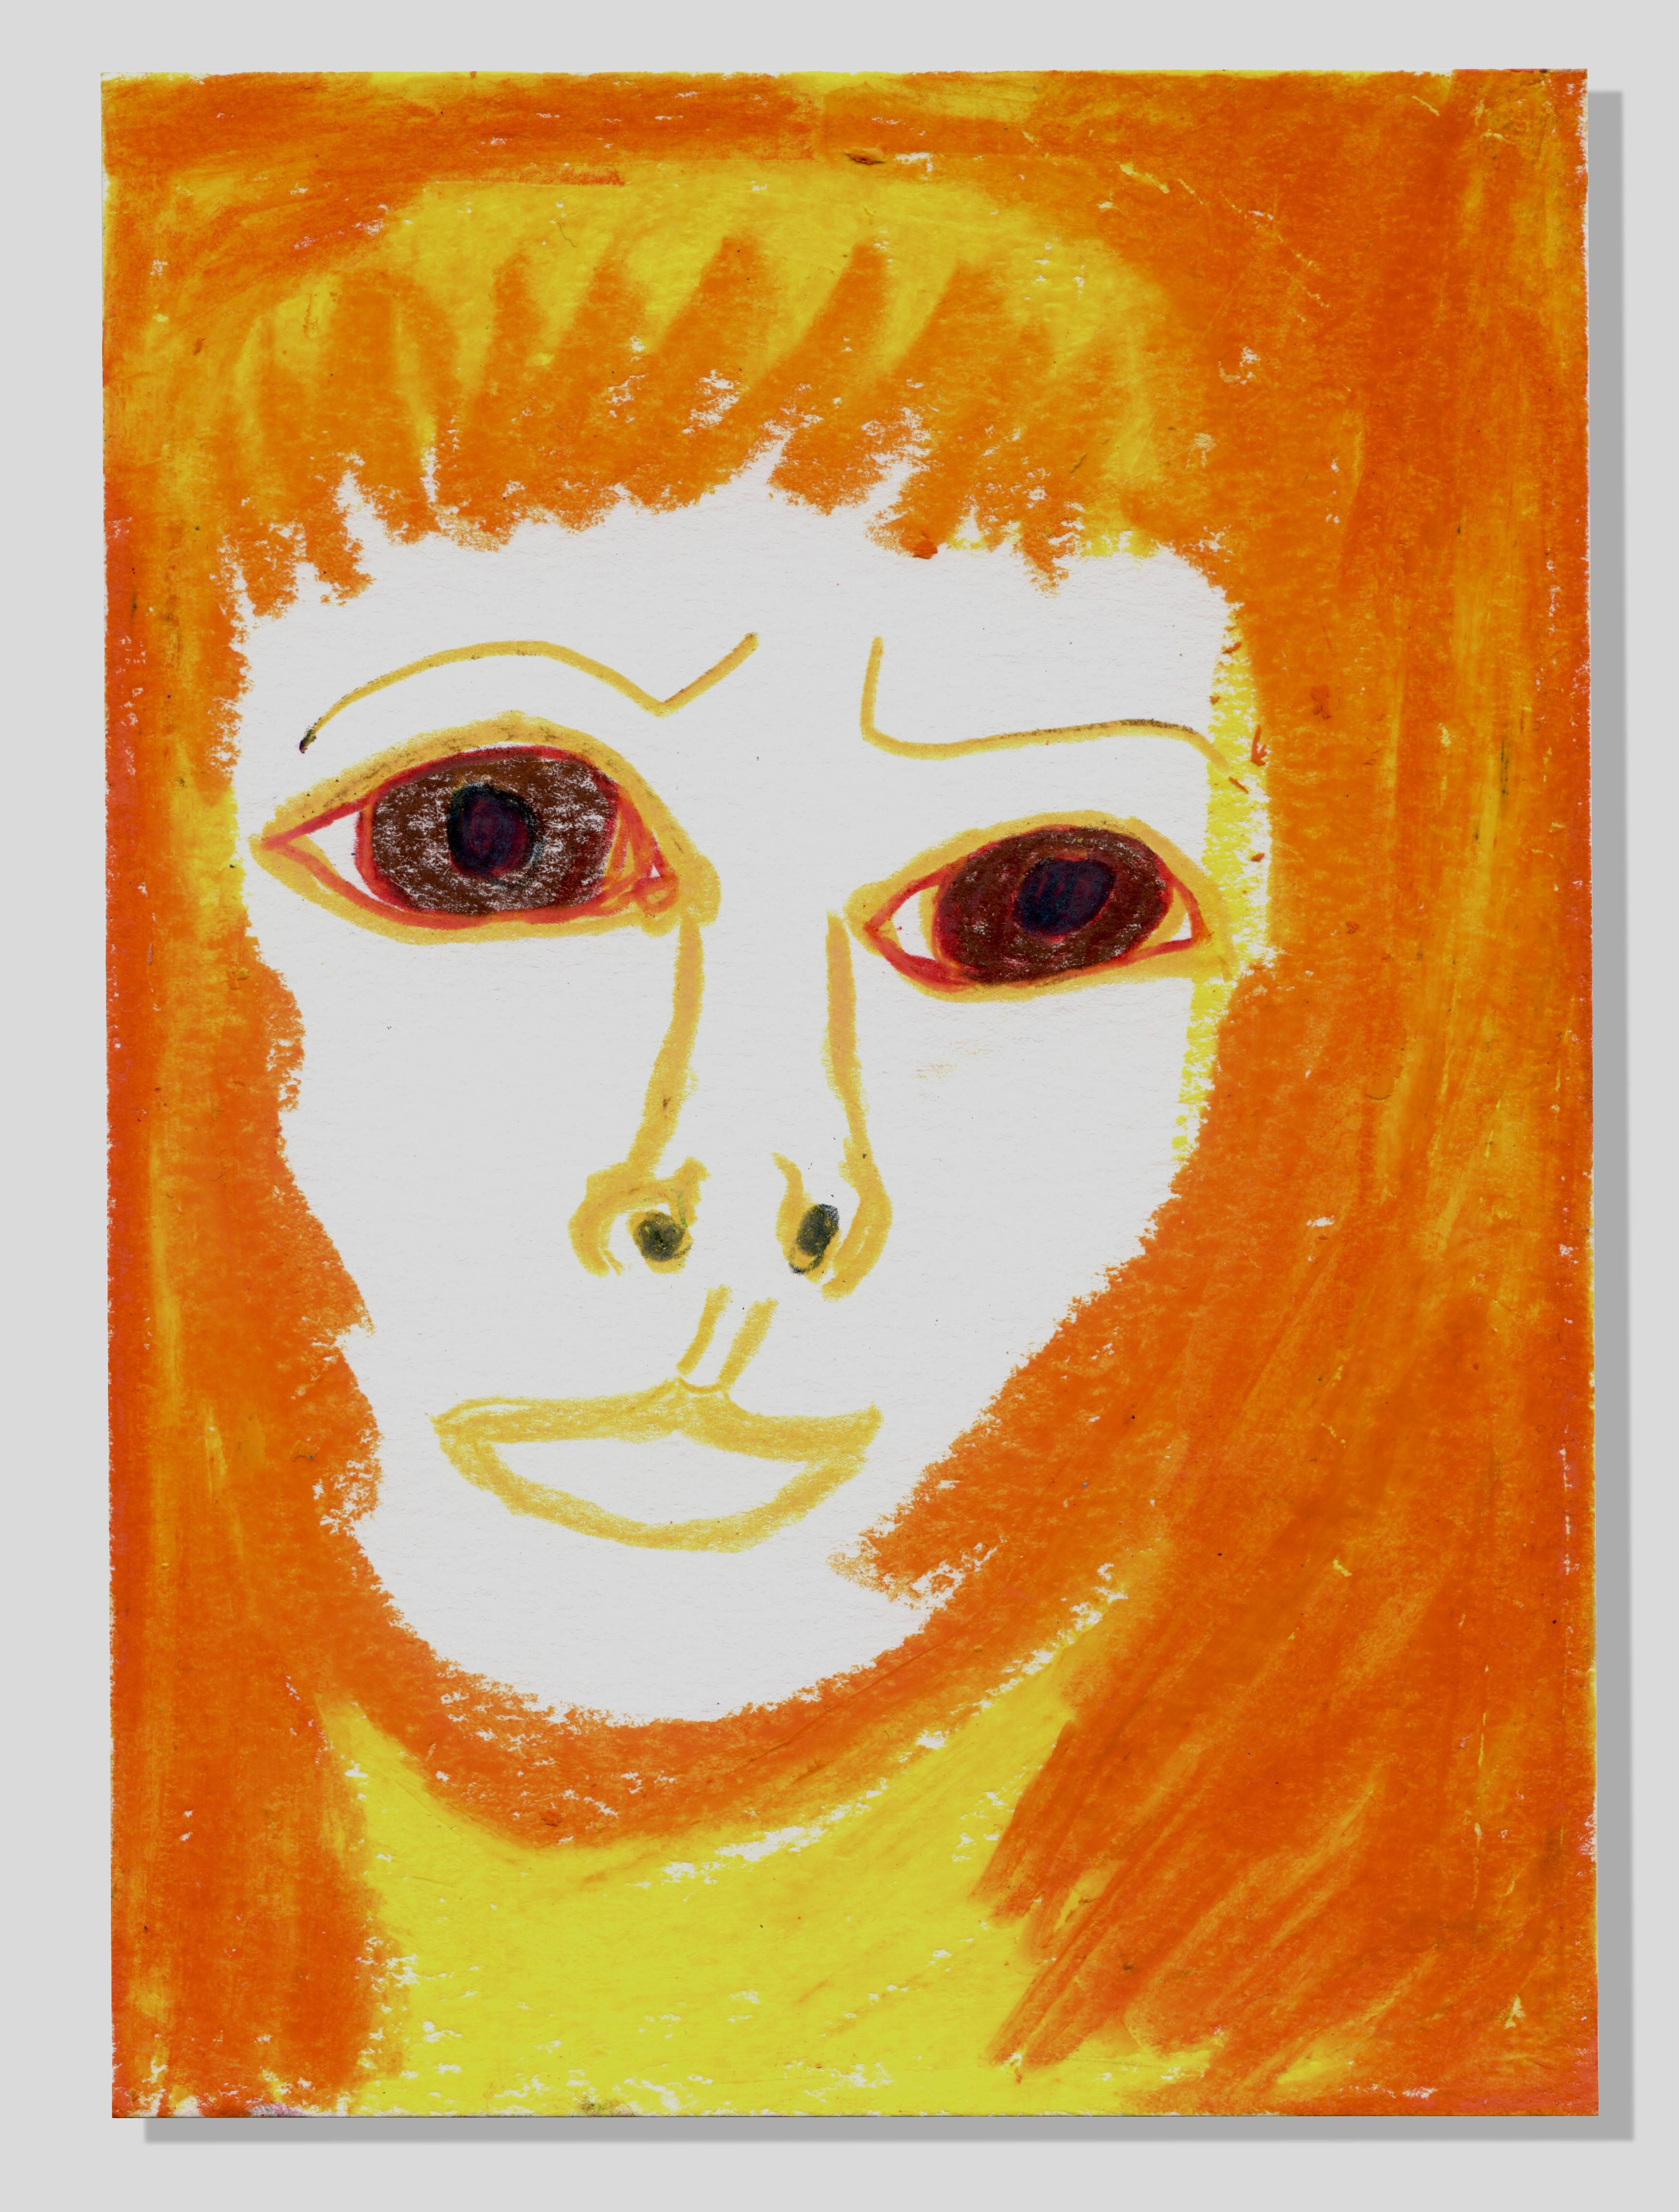 Dulphe Pinheiro Machado Abstract Drawing - Face in orange